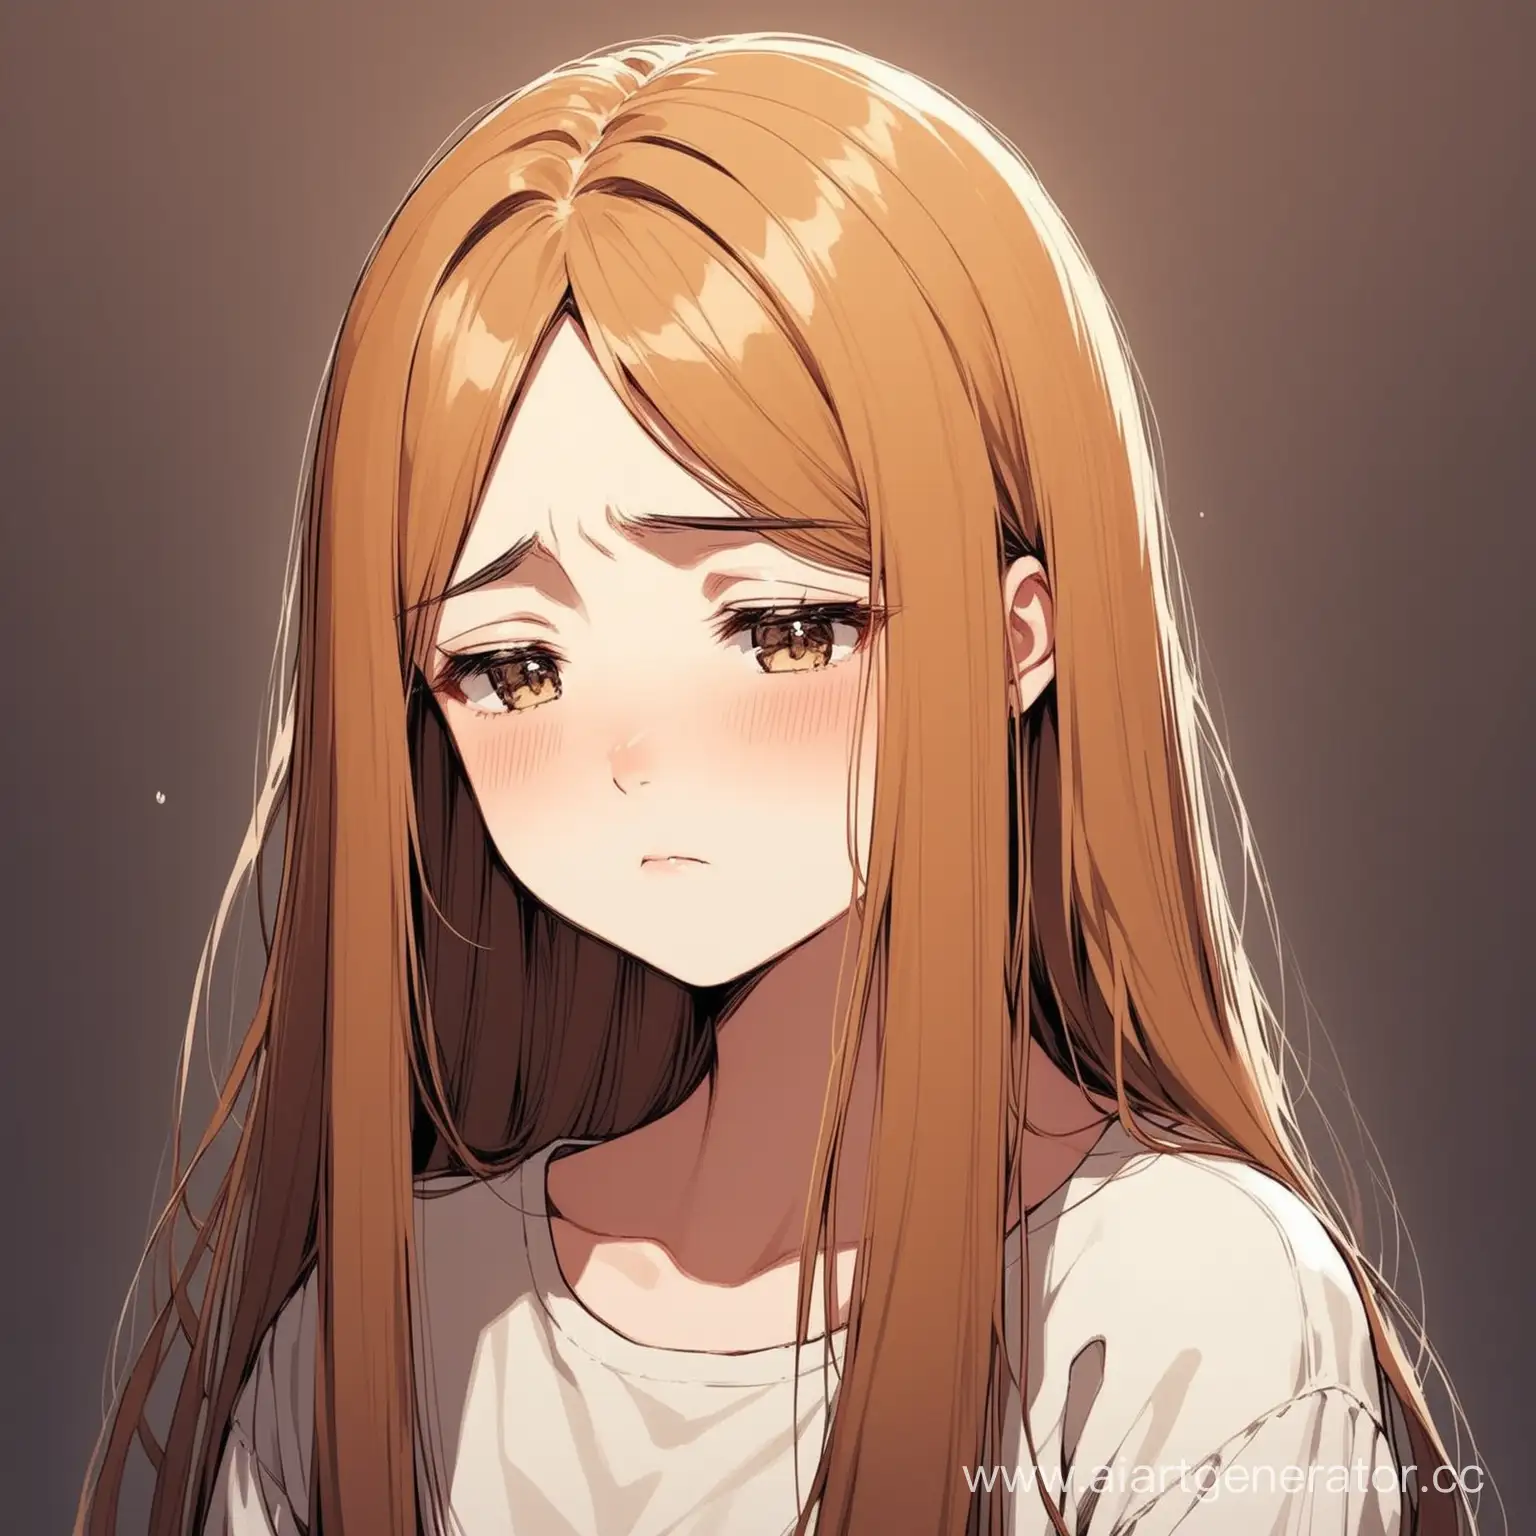 Sad-Girl-with-Long-Hair